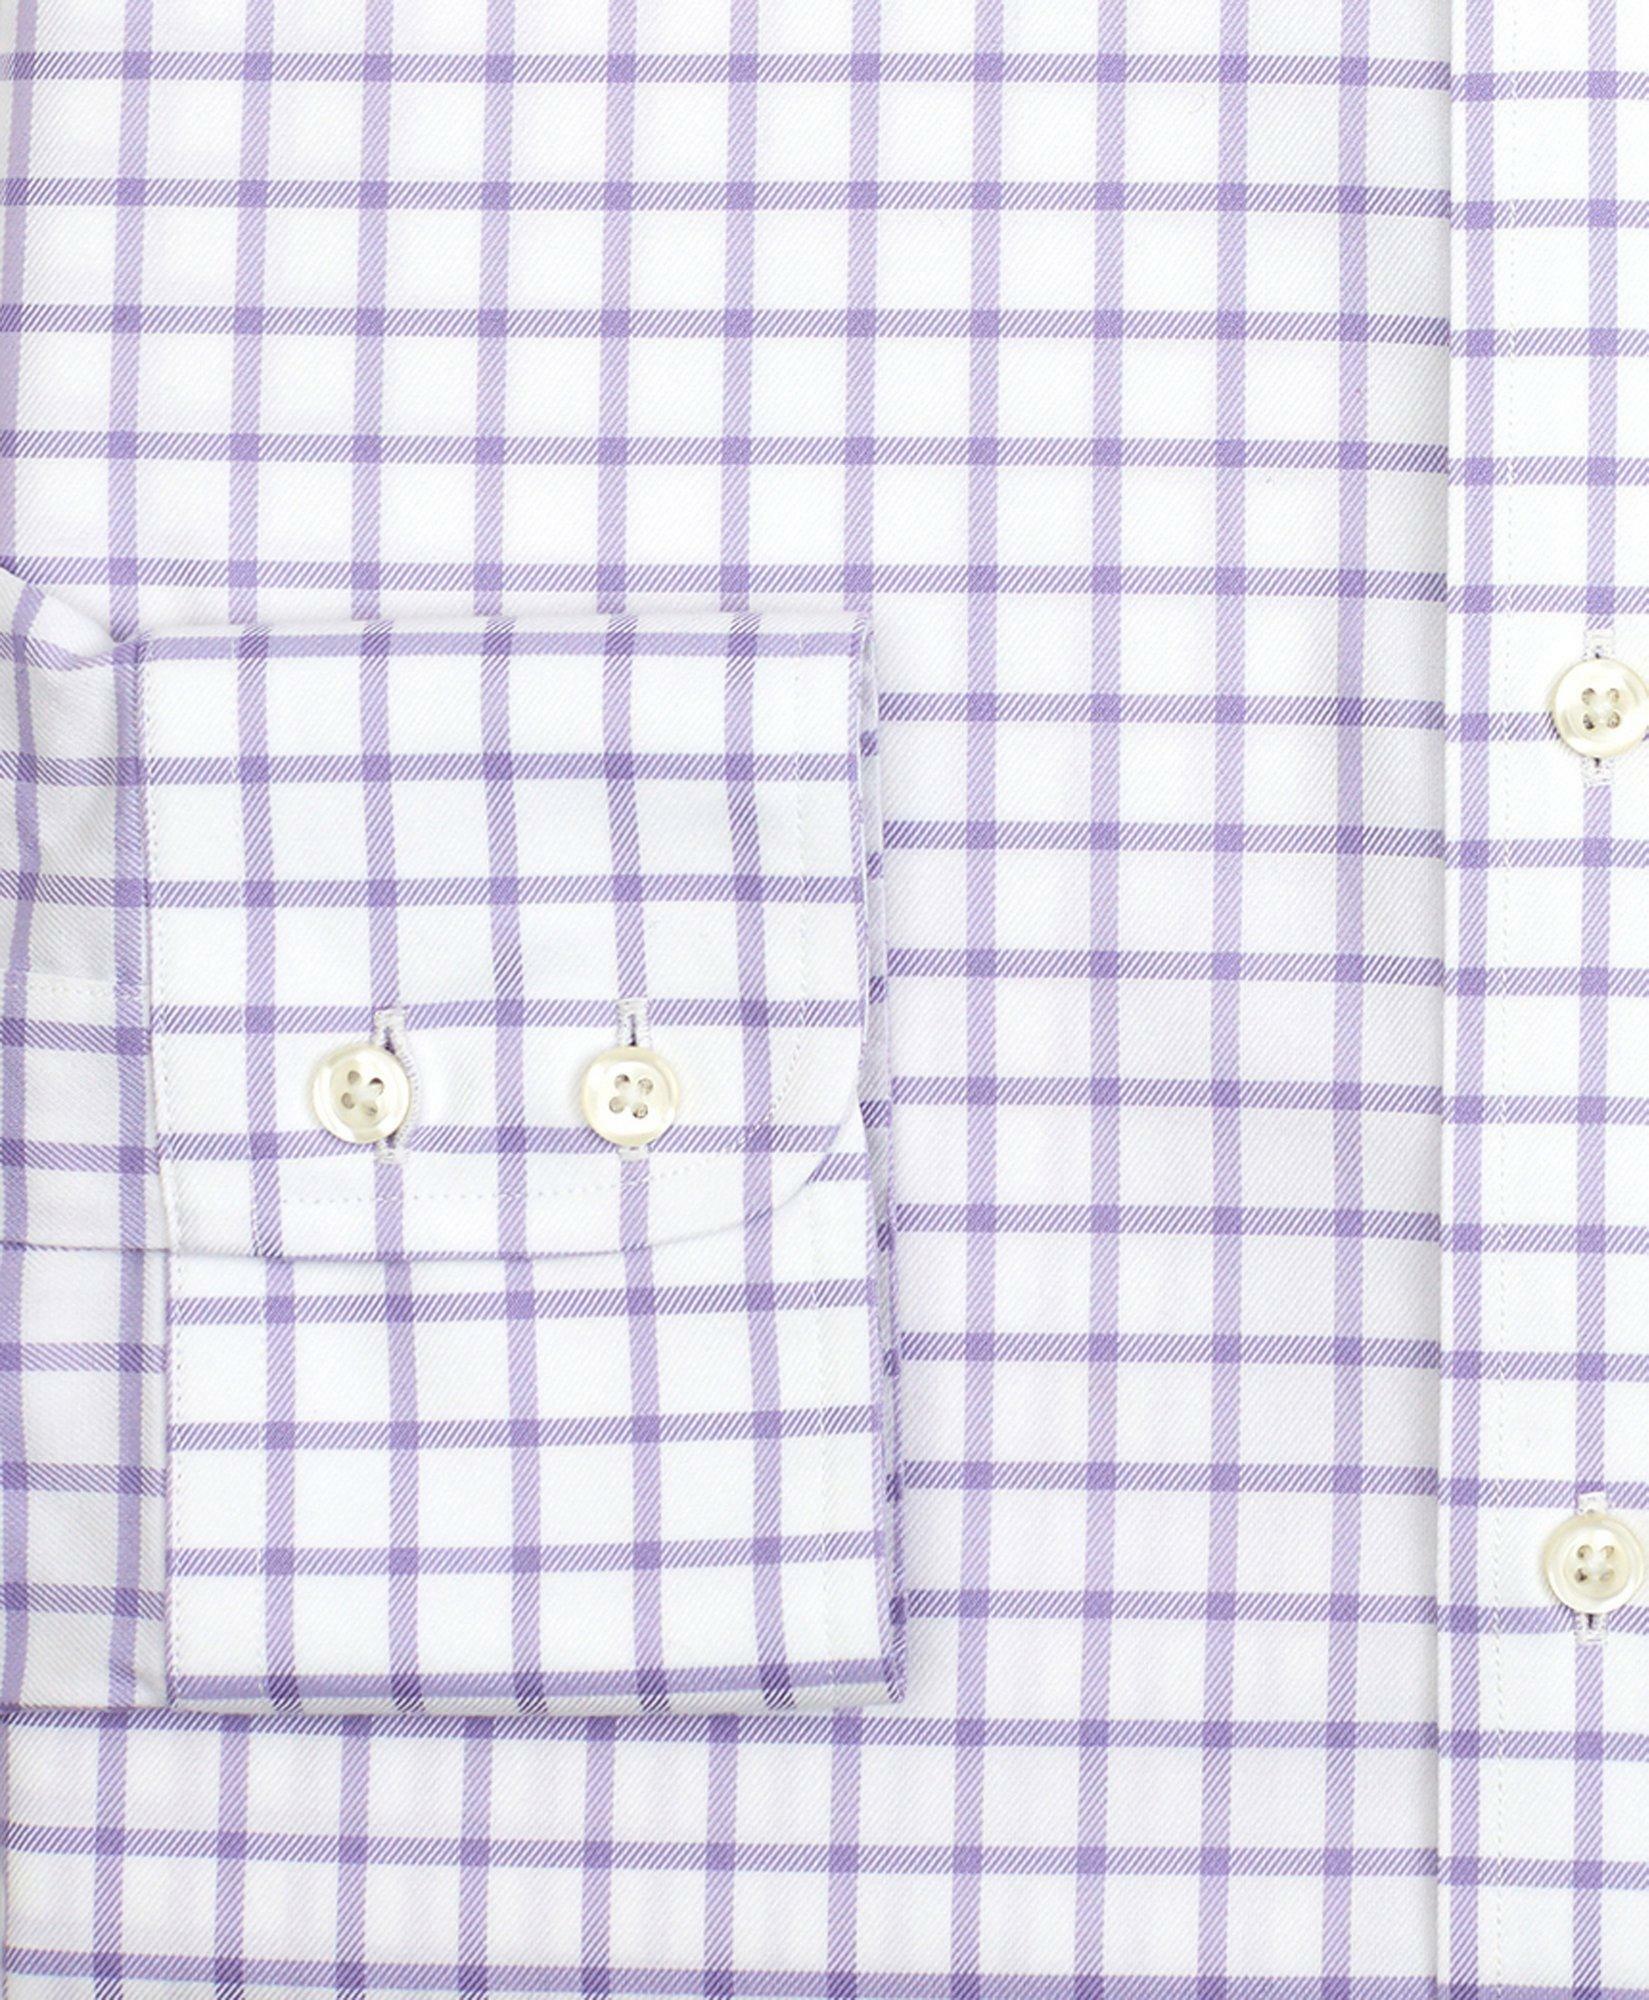 Brooks Brothers Men's Stretch Milano Slim-Fit Dress Shirt, Non-Iron Twill English Collar Grid Check | Lavender